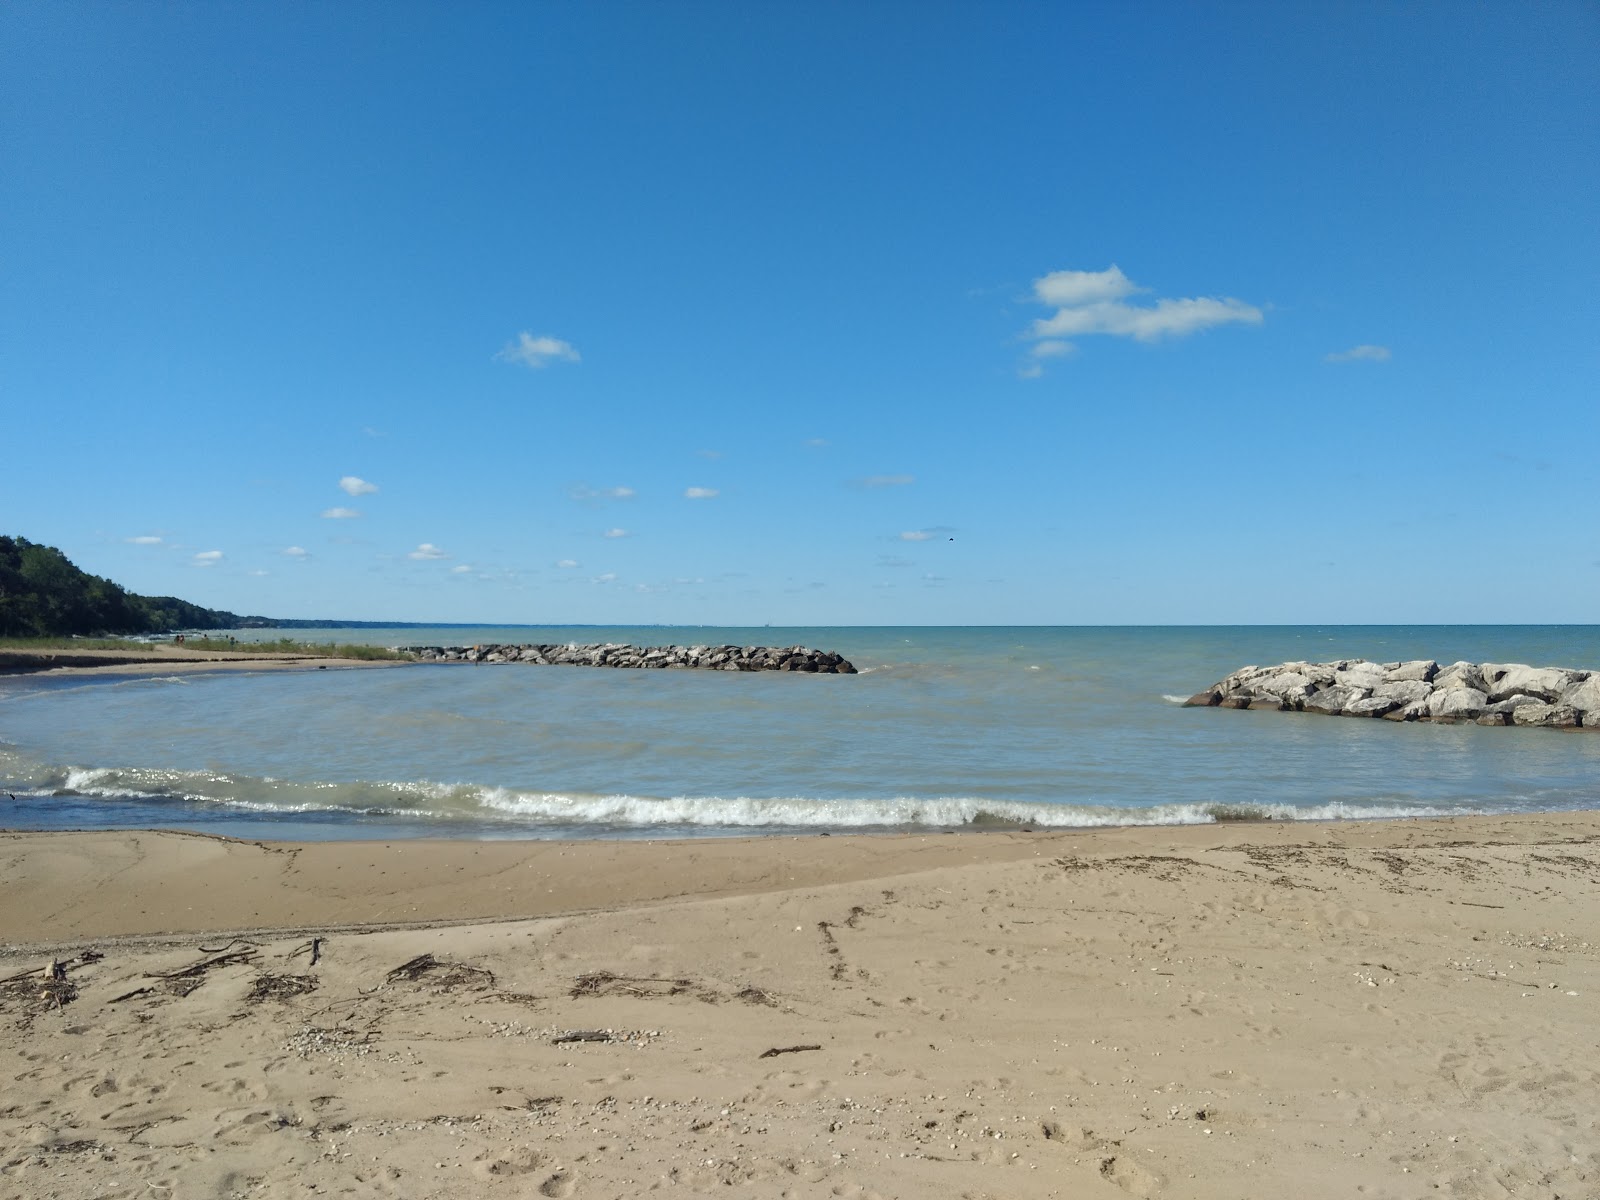 Foto de Rosewood Beach - lugar popular entre os apreciadores de relaxamento